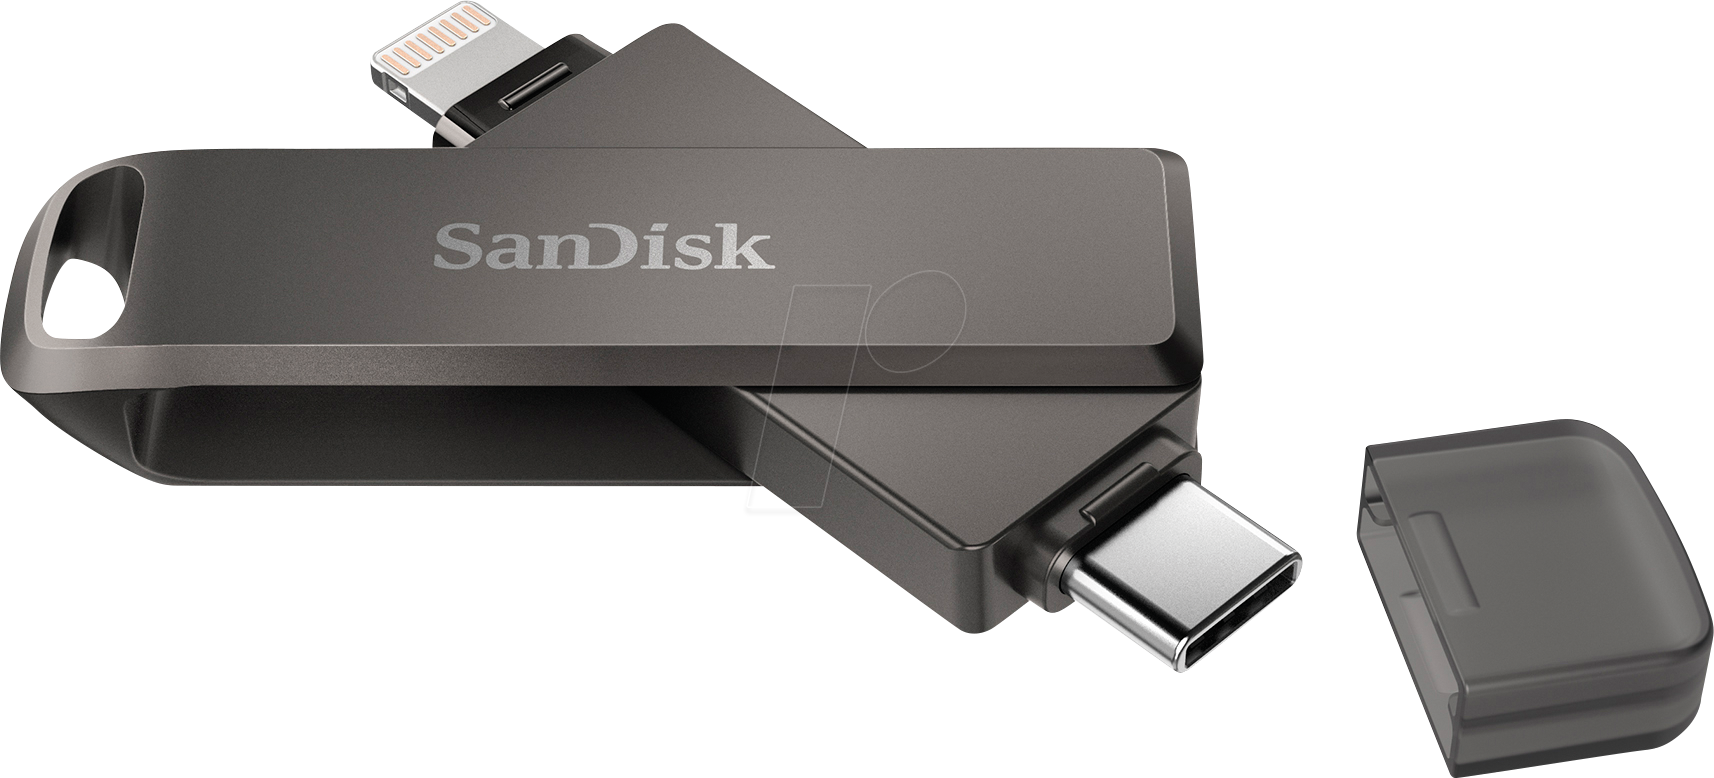 SDIX70N256GGN6NE: USB stick, USB 3.0, 256 GB, iXpand Luxe